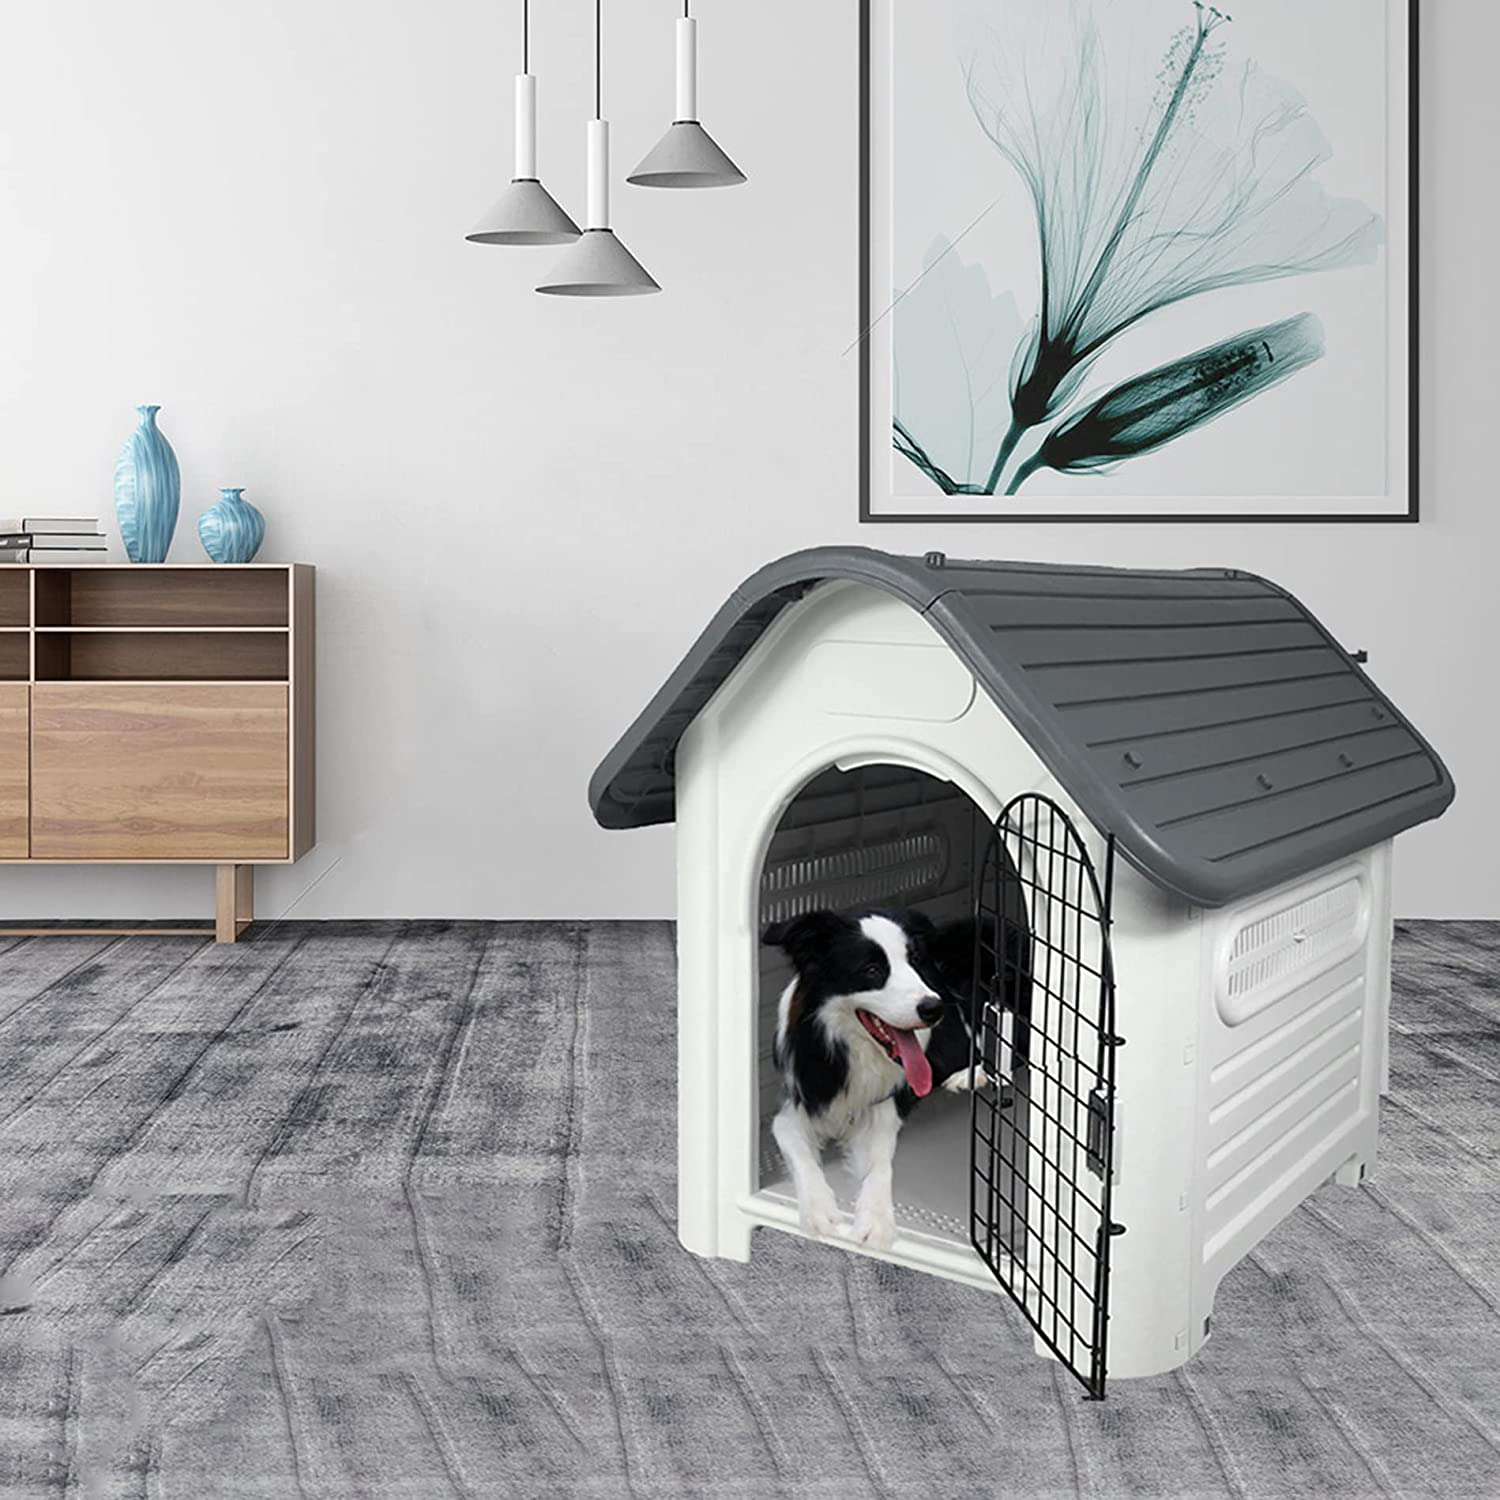 Sdyjfz Plastic Dog Housexxl Height Waterproof Plastic Dog Kennelindoor Outdoor Detachable Sturdy Floor for Backyard Patio Balcony